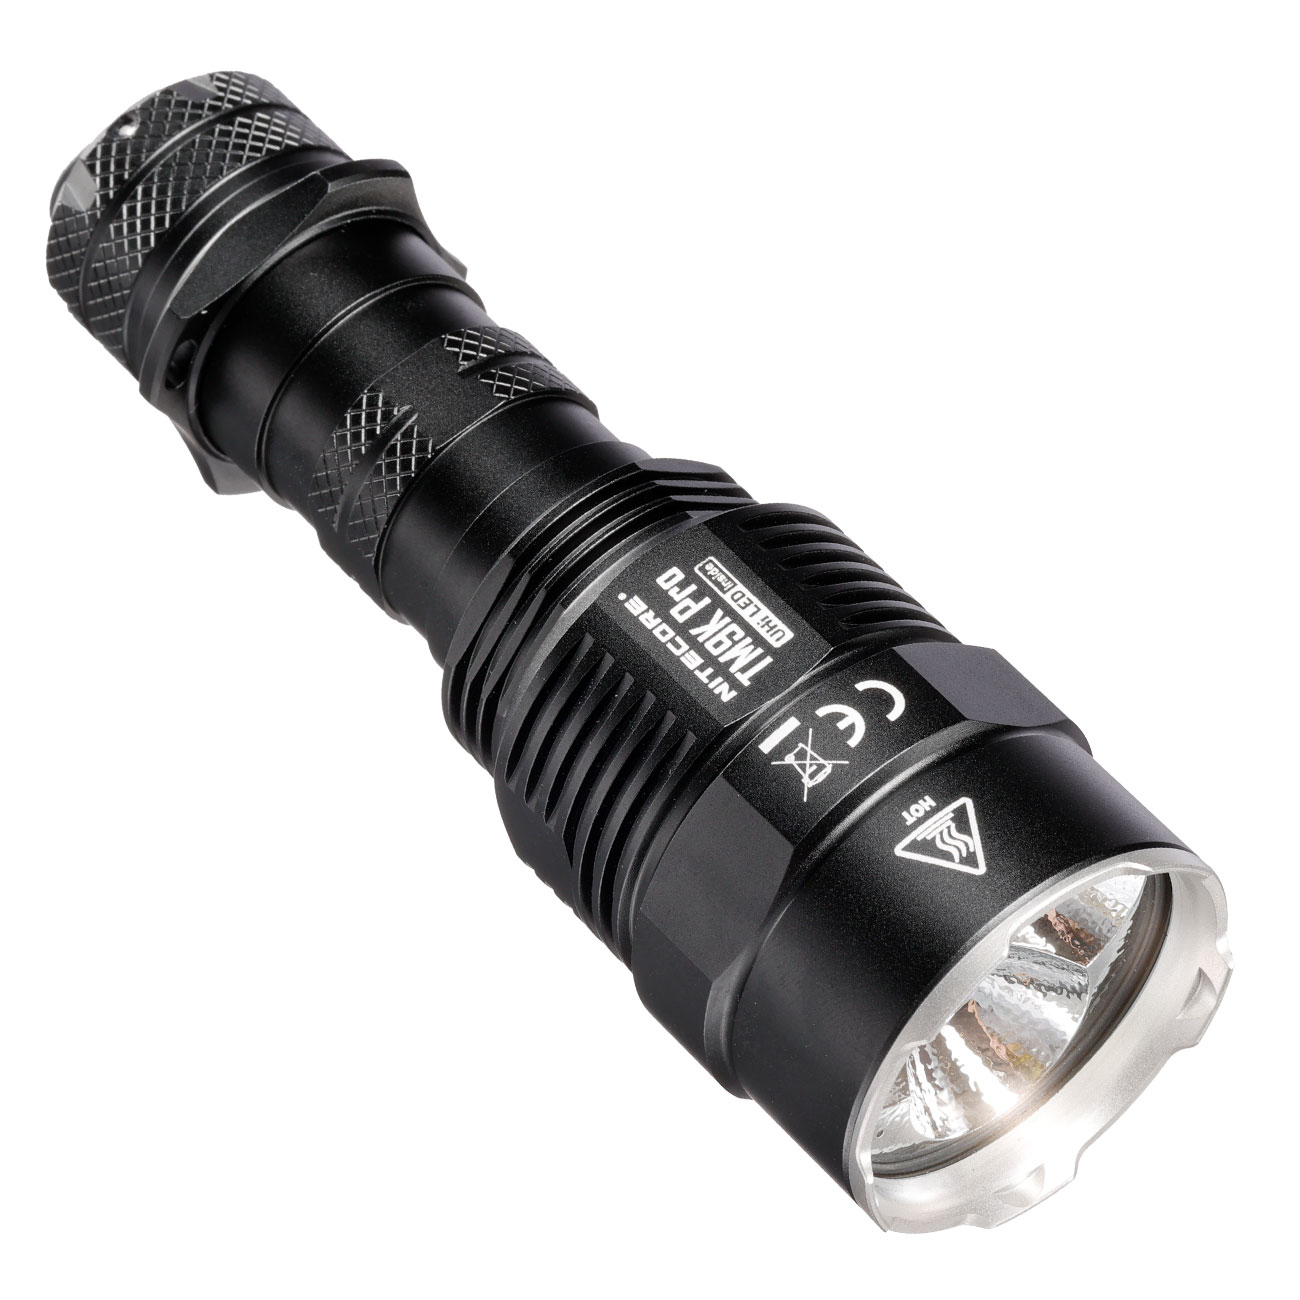 Nitecore LED Taschenlampe TM9K PRO 9900 Lumen schwarz inkl. Akku, Holster, Ladekabel, Lanyard und Grtelclip Bild 5